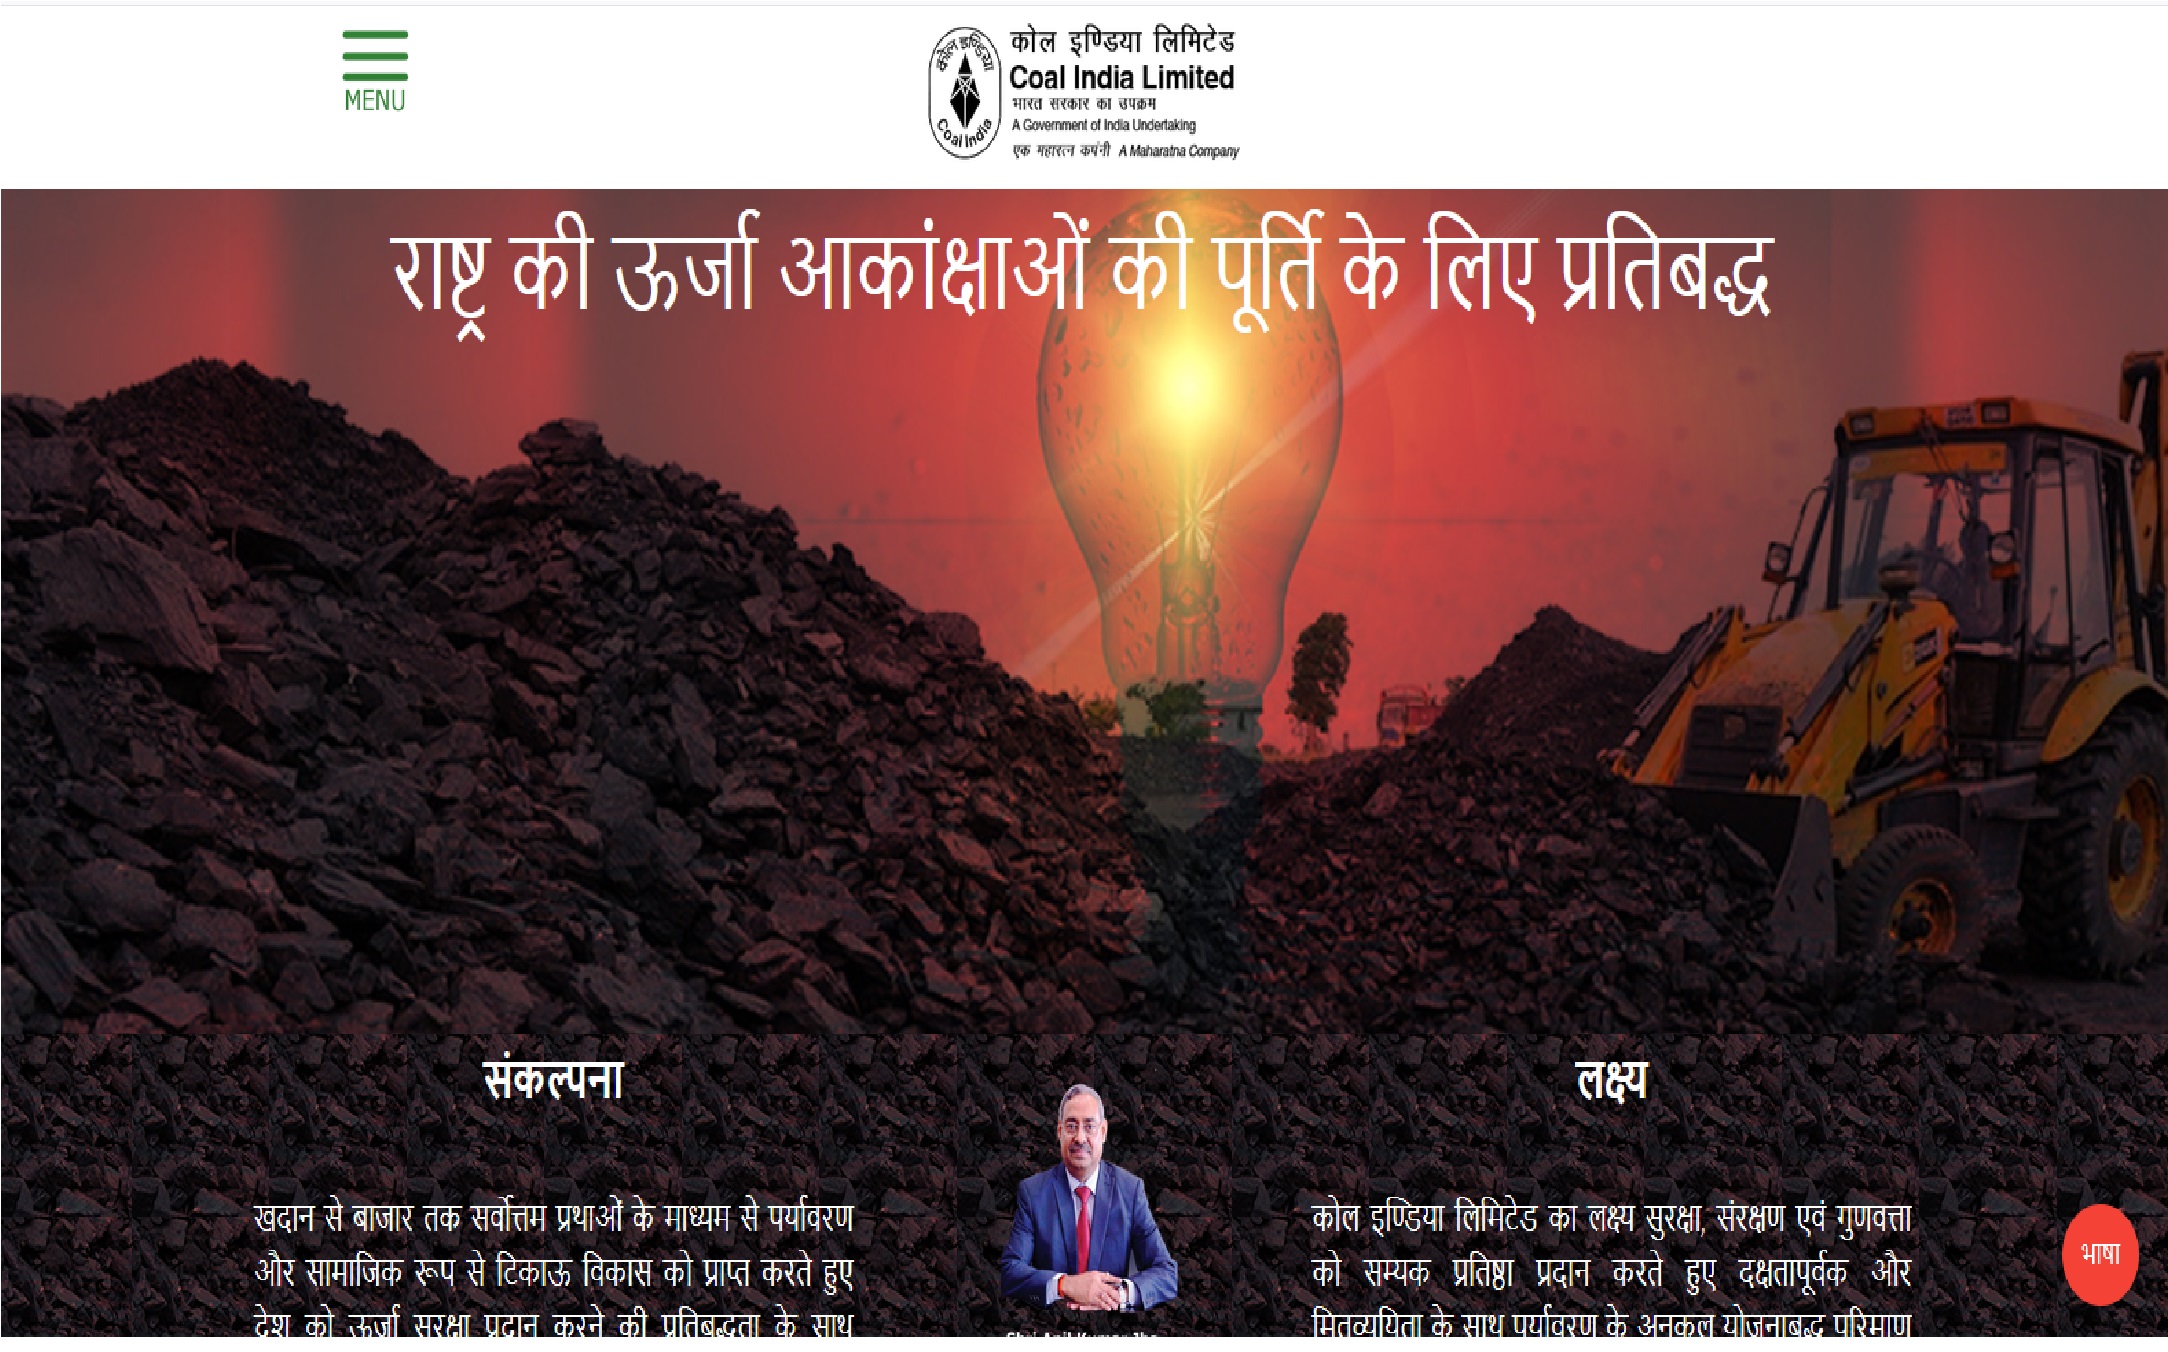 CIL Coal India